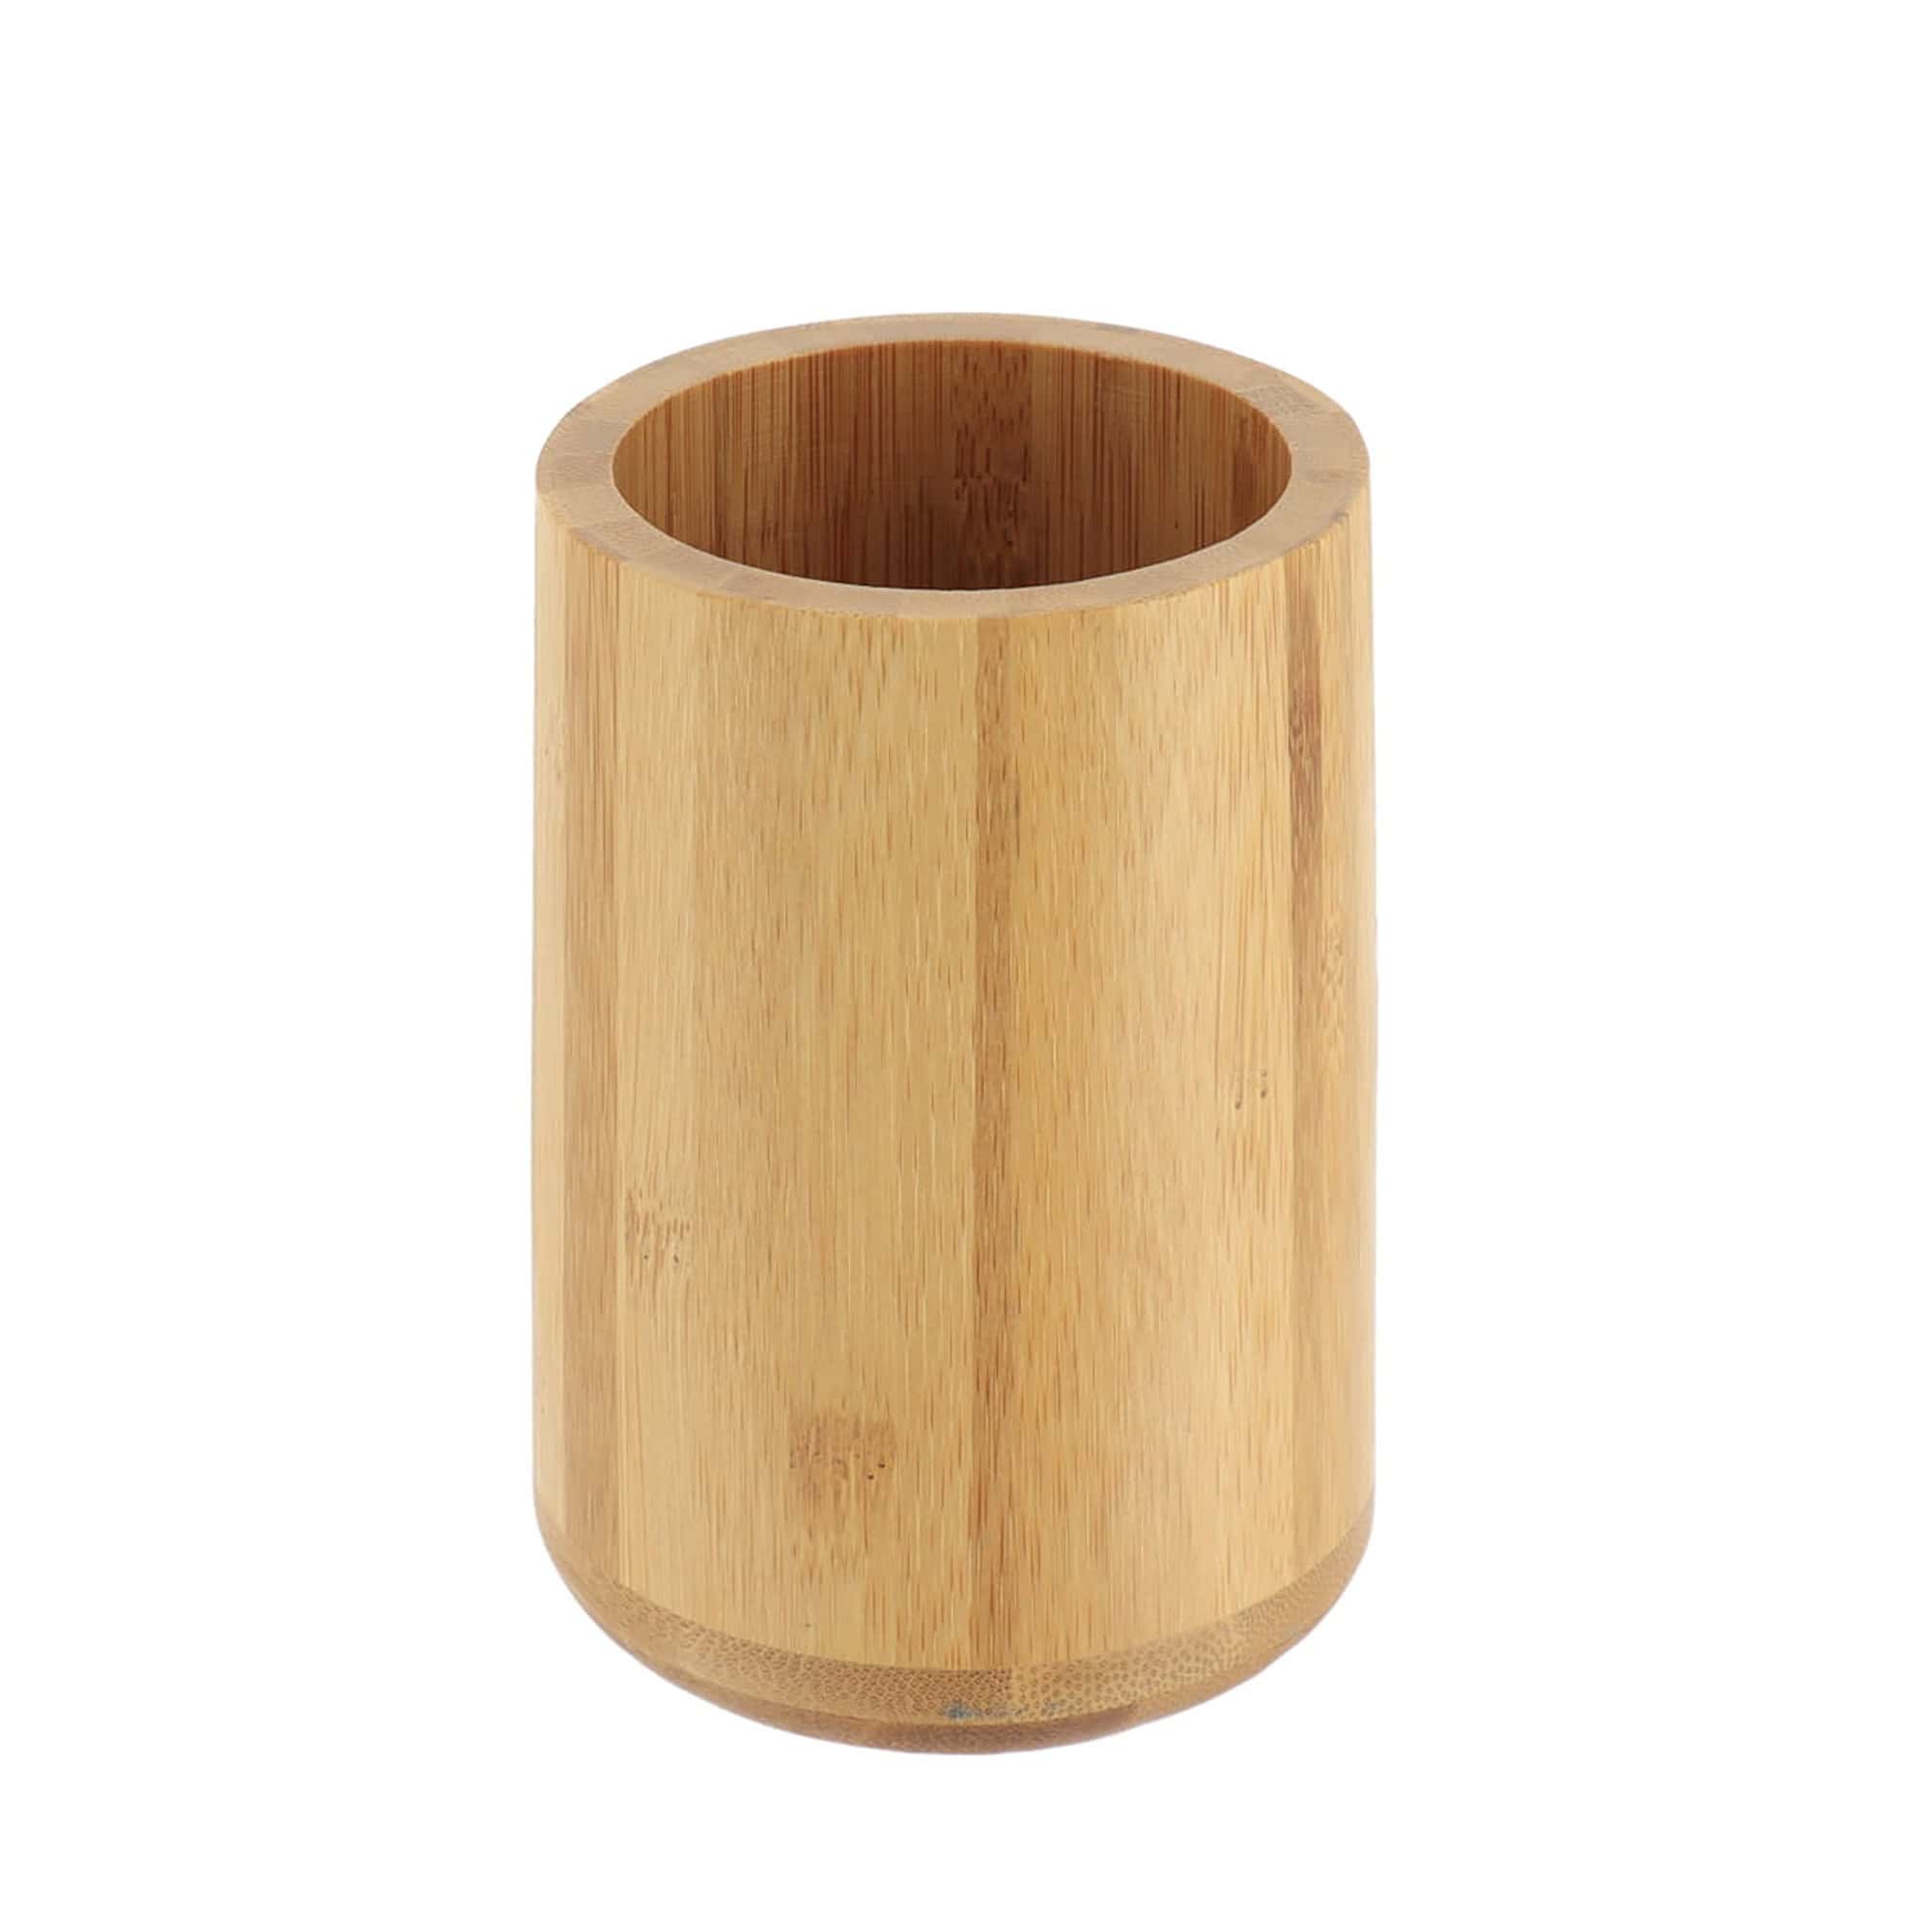 Tumbler cup in natural bamboo